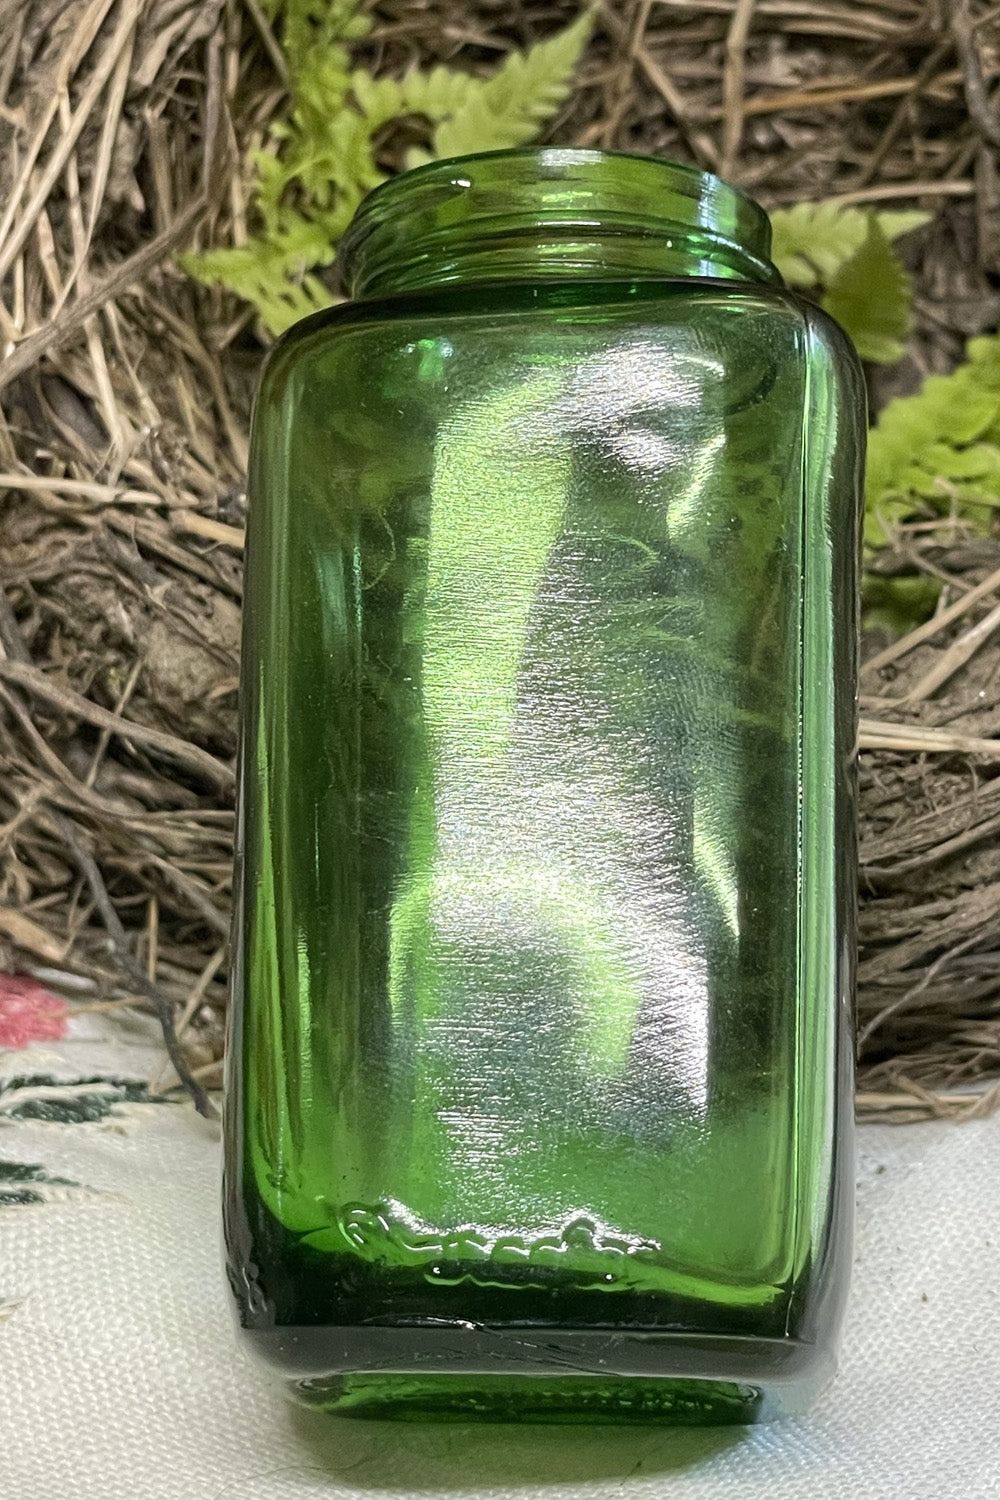 Antique Square Clear Glass Medicine Bottle - 2 fl. oz. Apothecary